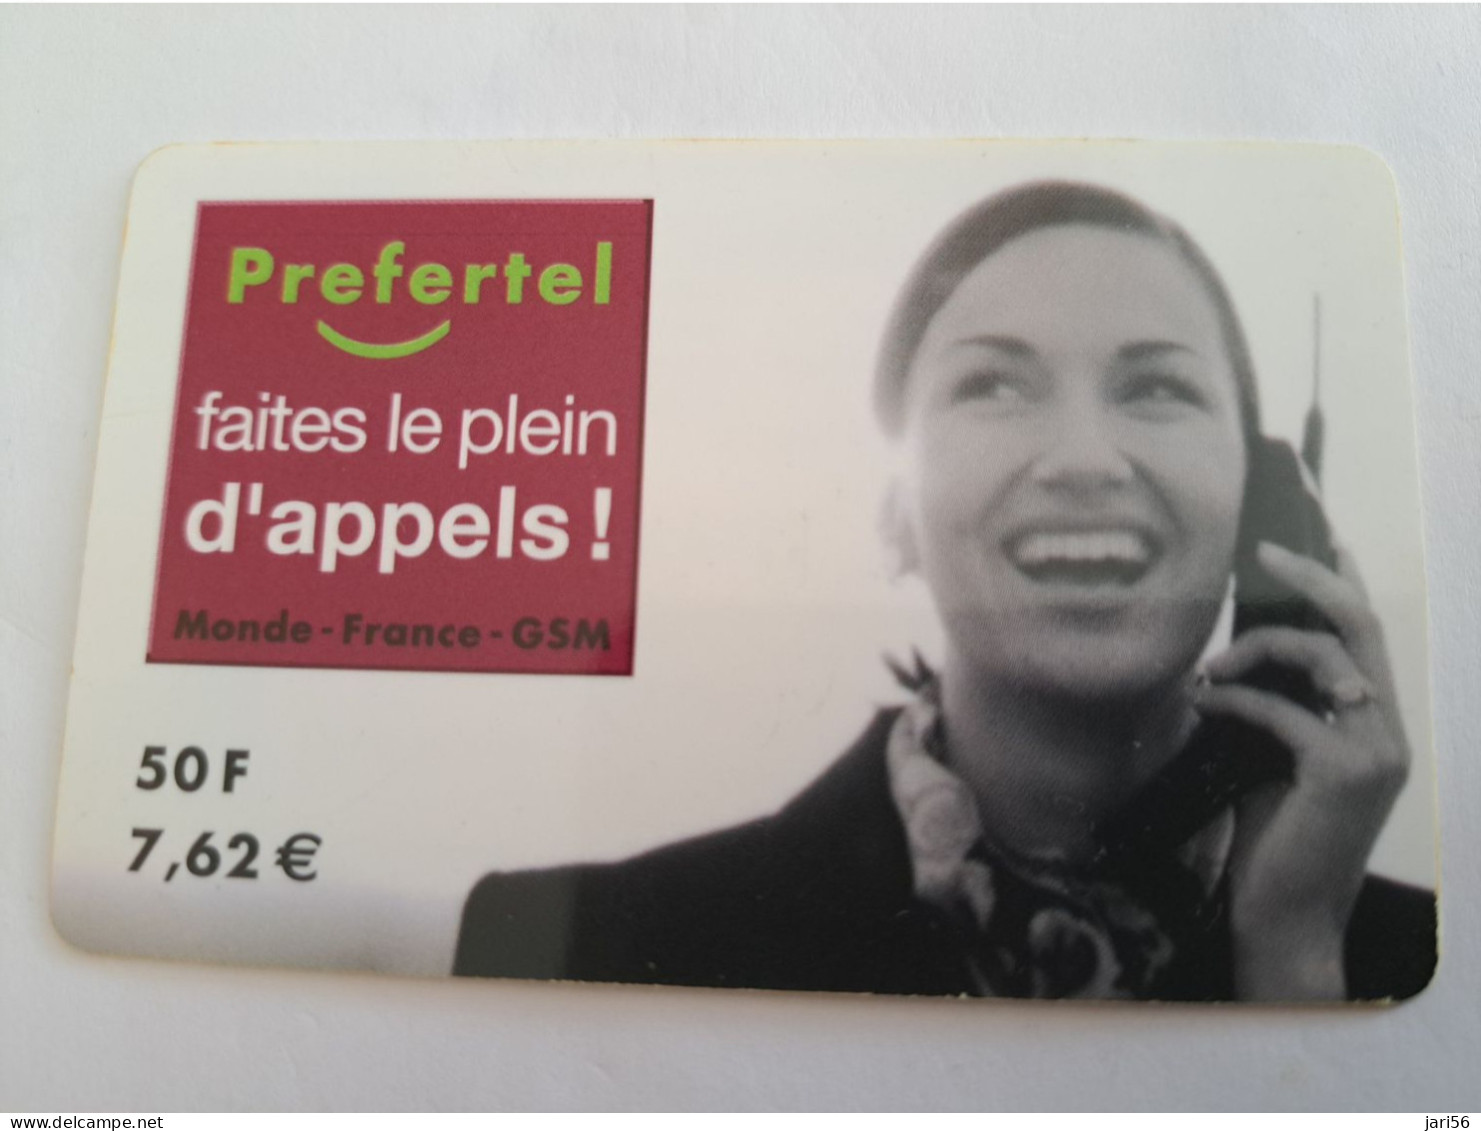 FRANCE/FRANKRIJK  / € 7,62/ PREFERTEL/ LADY ON PHONE    / PREPAID  USED         ** 14734** - Nachladekarten (Handy/SIM)